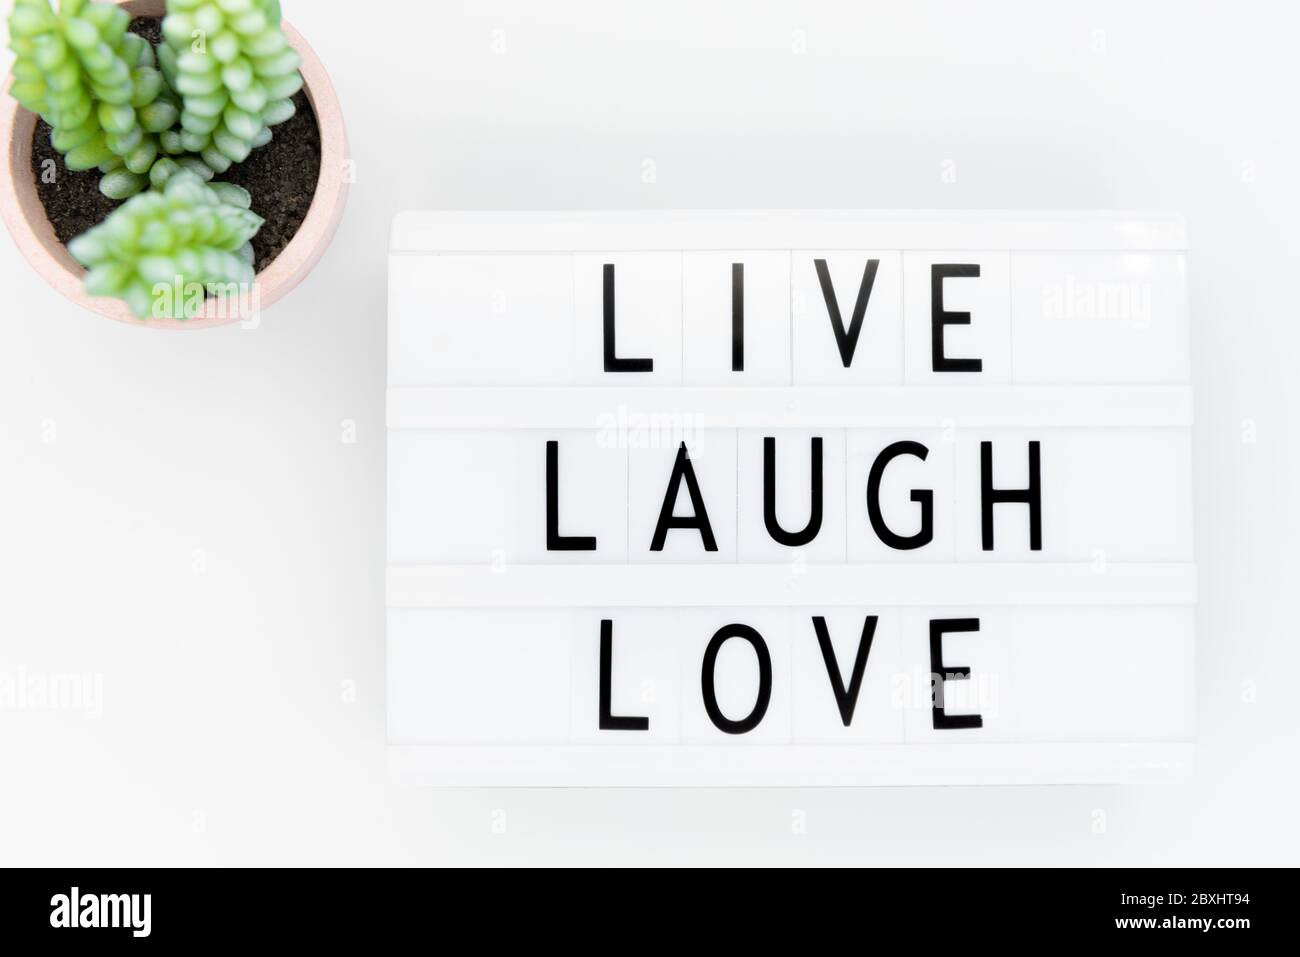 Live laugh love inspirational message on mountain landscape Stock Photo   Alamy